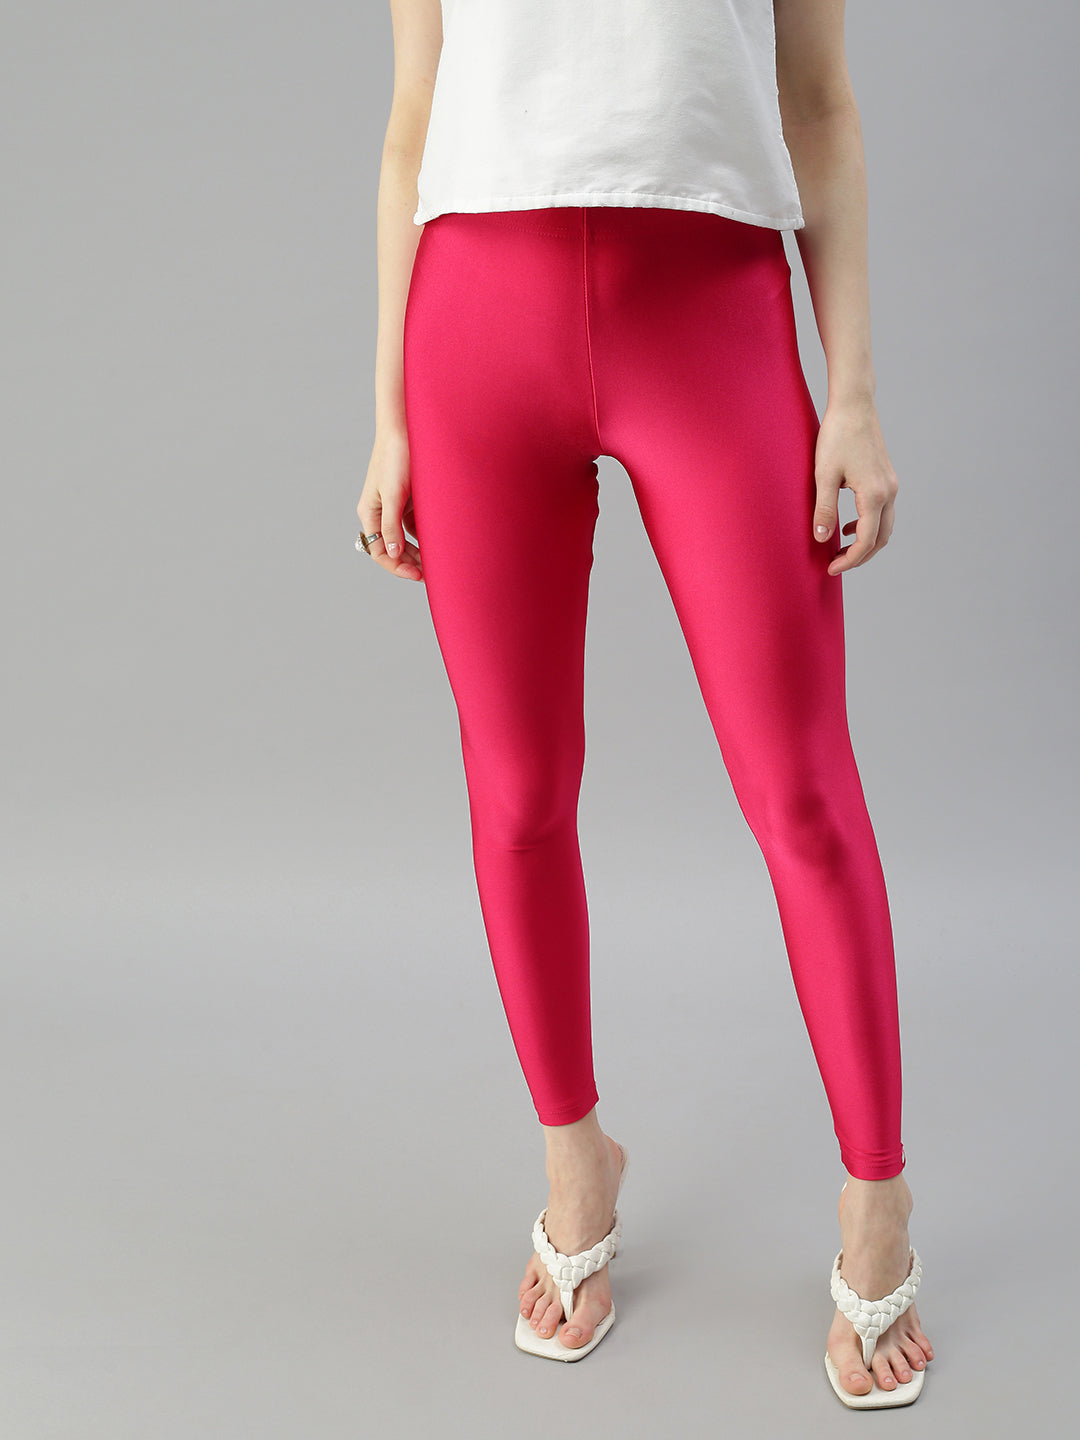 Fabletics Mid Rise Printed Pink Shimmer Camo Powerhold Leggings Yoga pants  Small | eBay